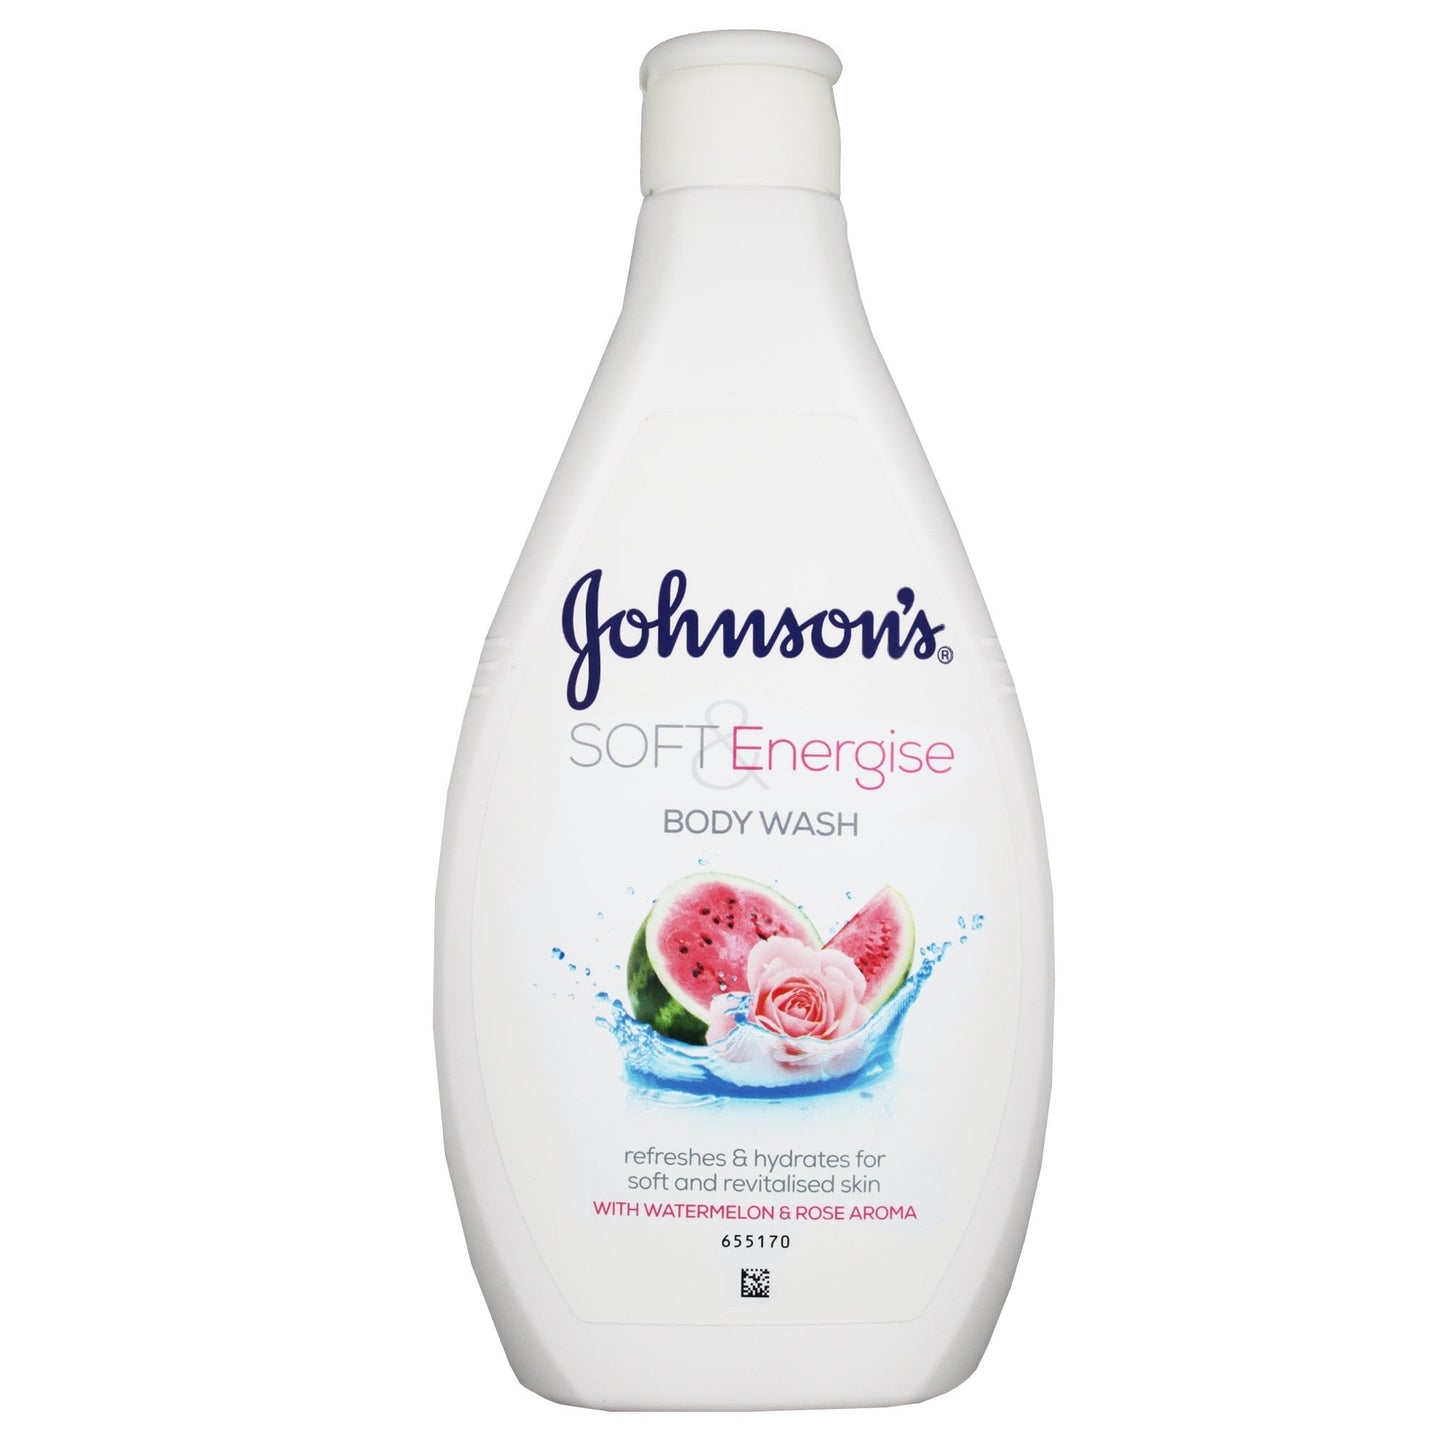 Johnson's Soft & Energy Body Wash 400ml